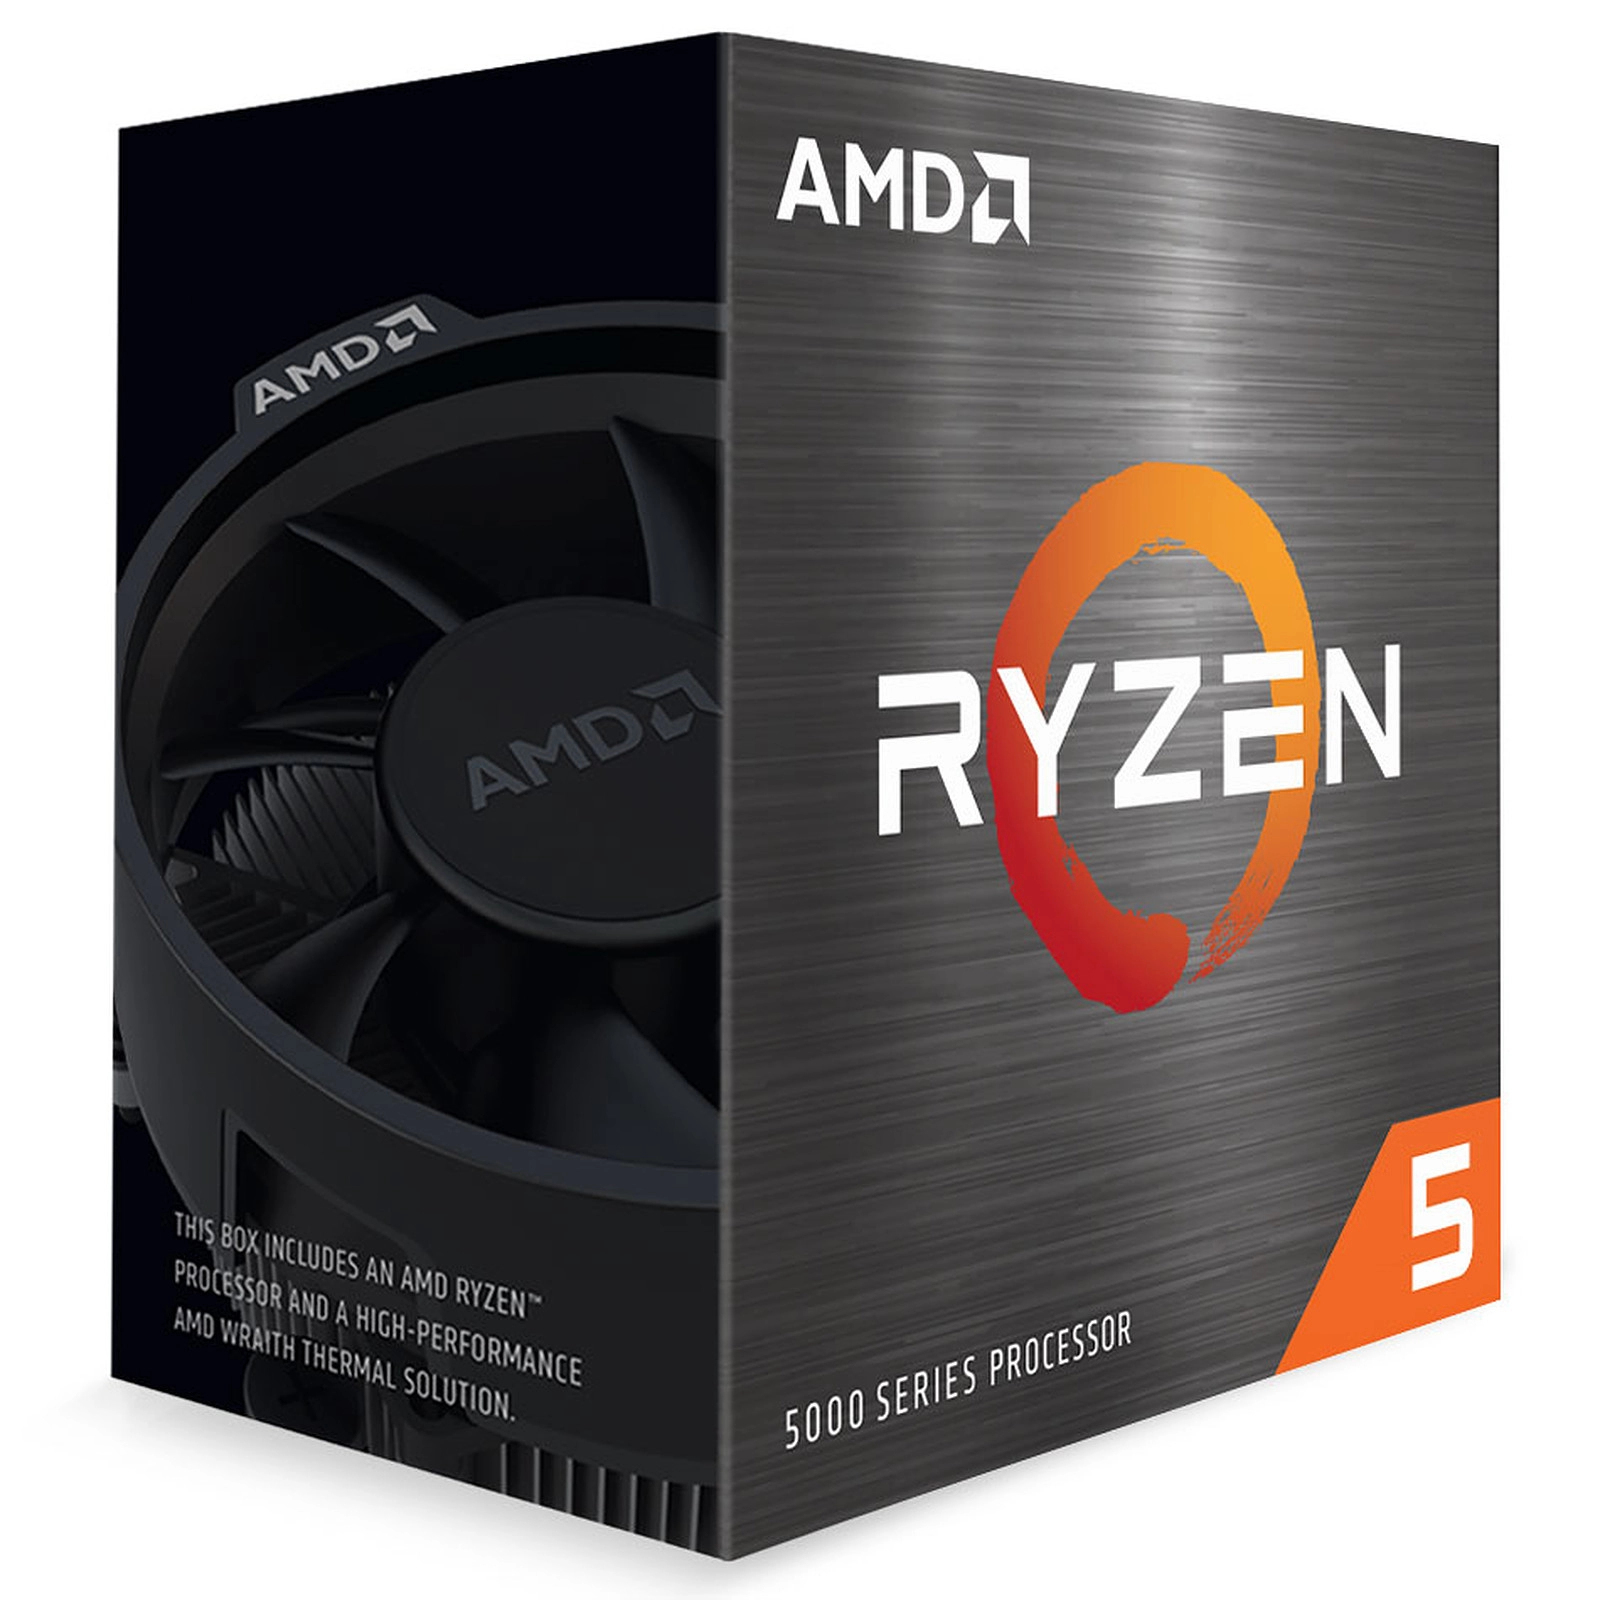 AMD Ryzen™ 5 4500, Socket AM4, 3.6-4.1GHz (6C/12T), 3MB L2 + 8MB L3 Cache, No Integrated GPU, 7nm 65W, Unlocked, Bulk with Wraith Stealth Cooler